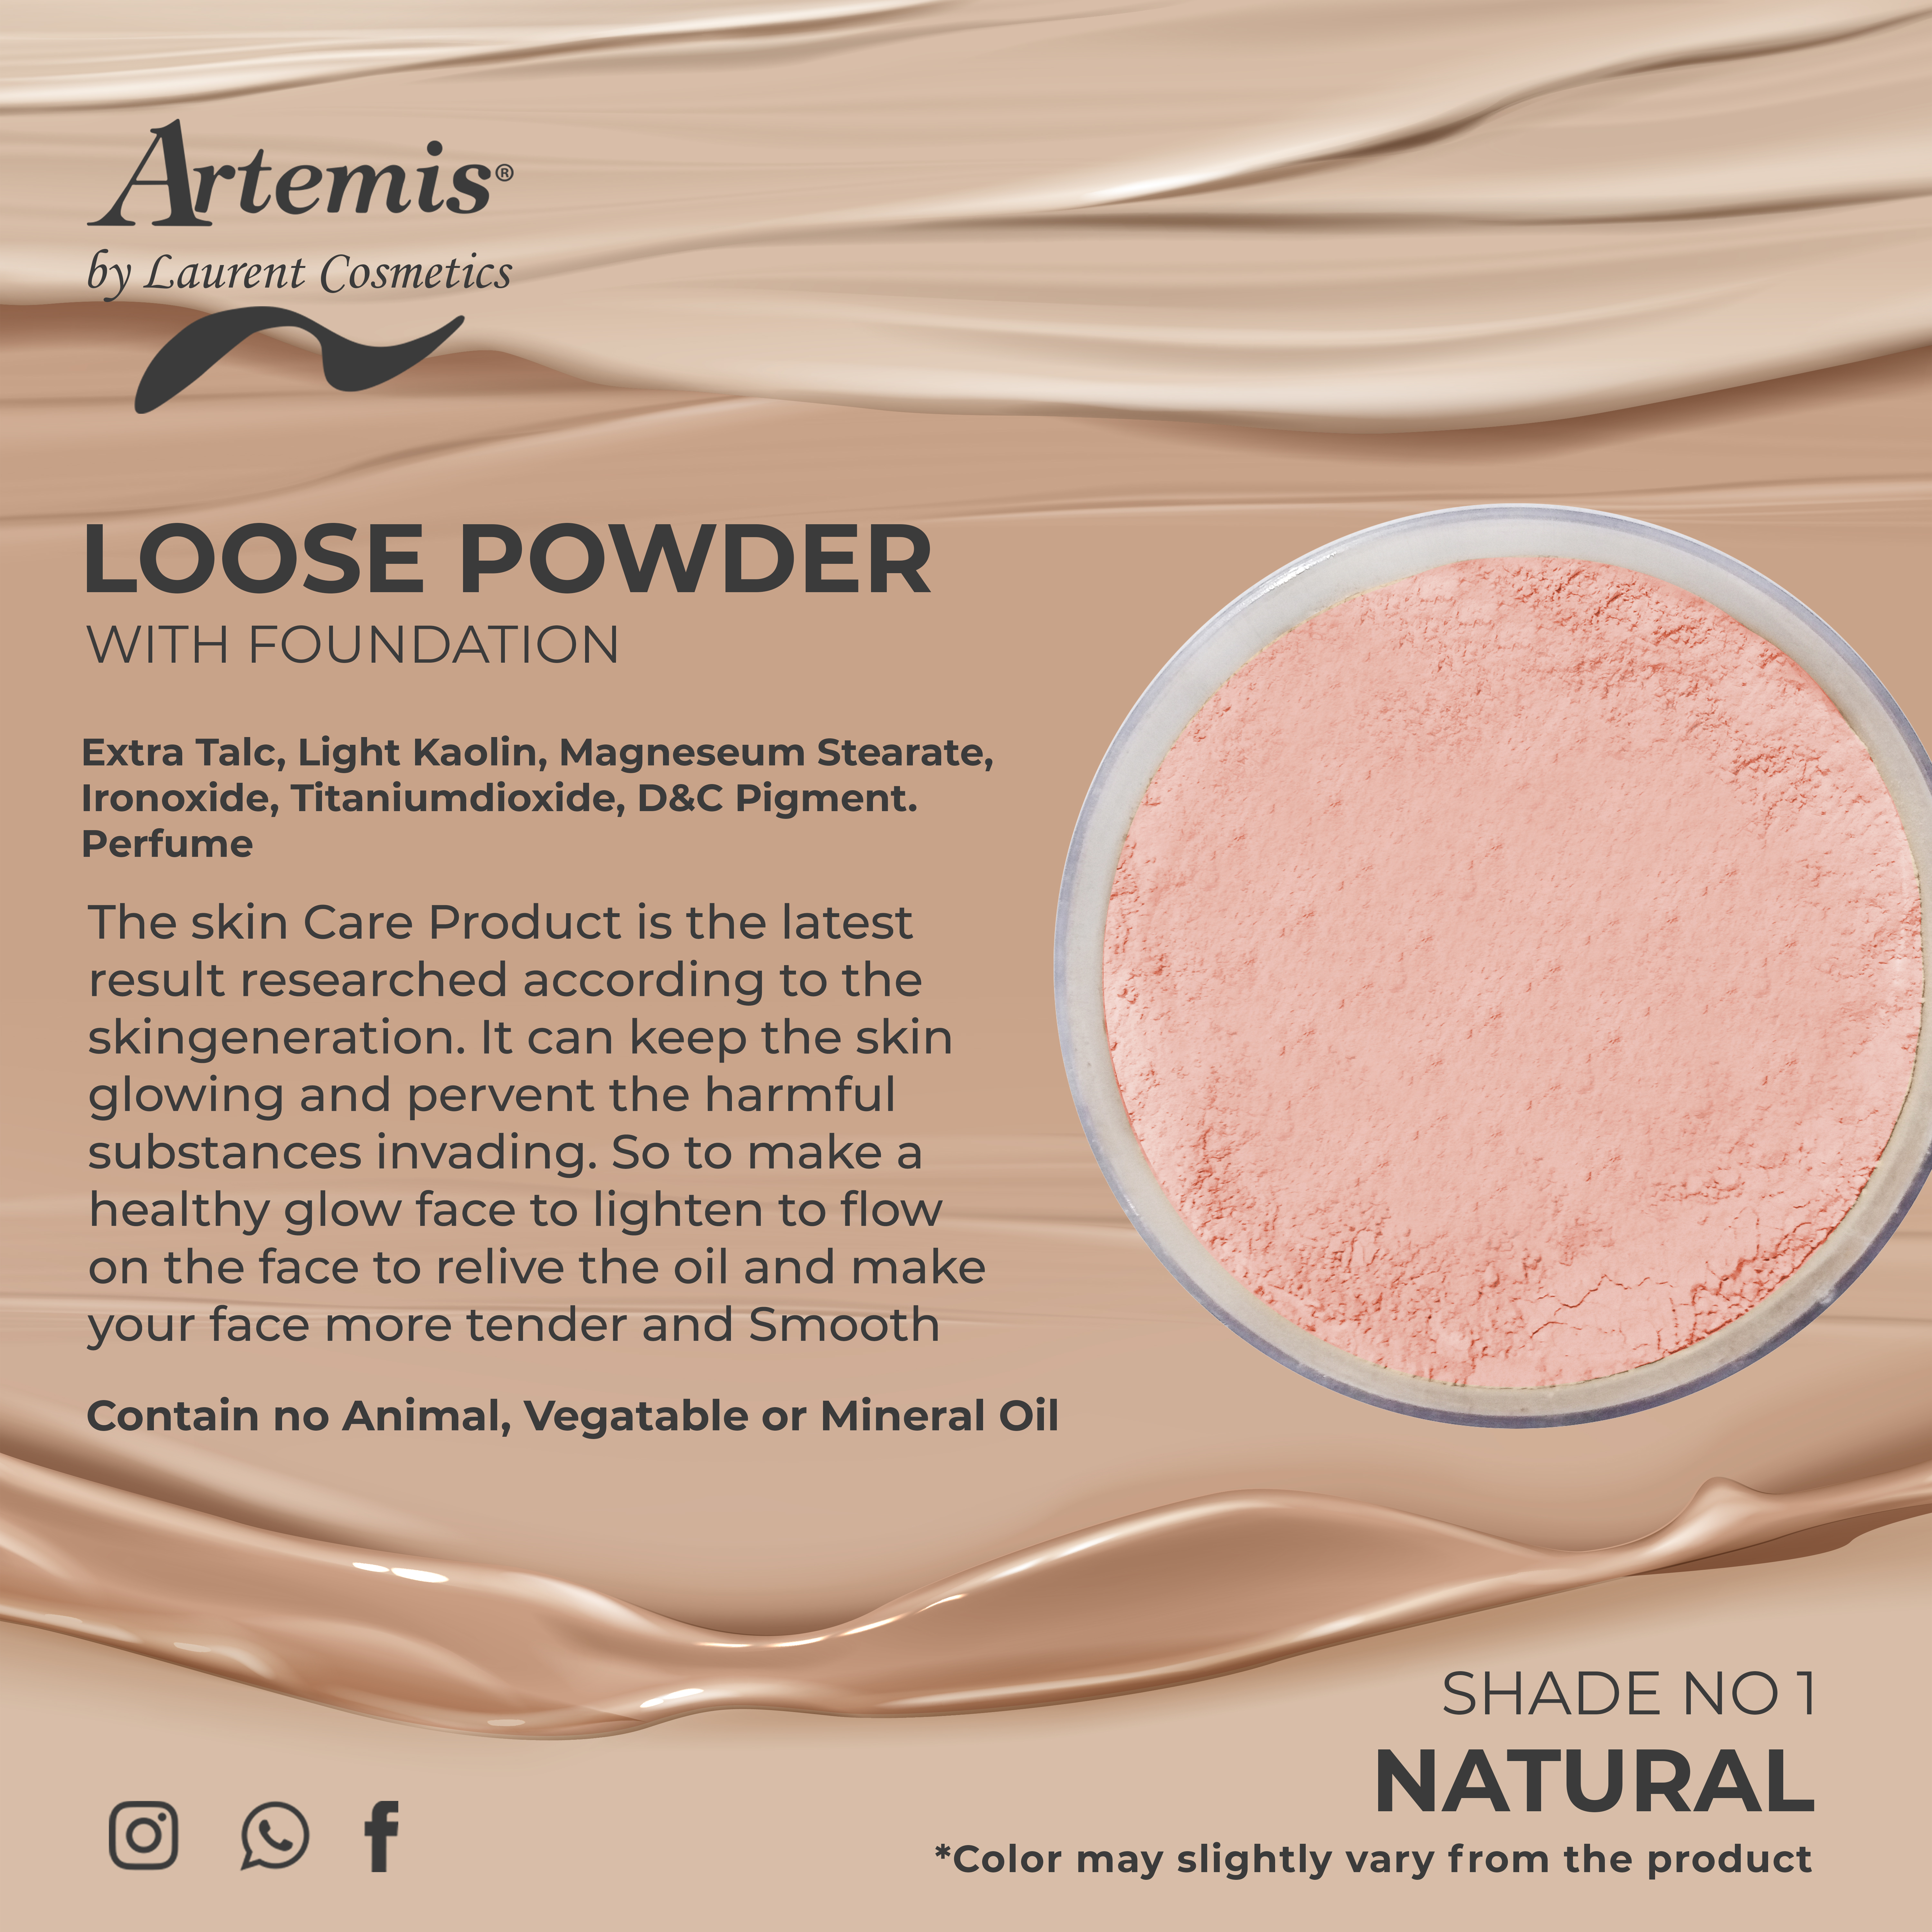 01 Natural Loose Powder